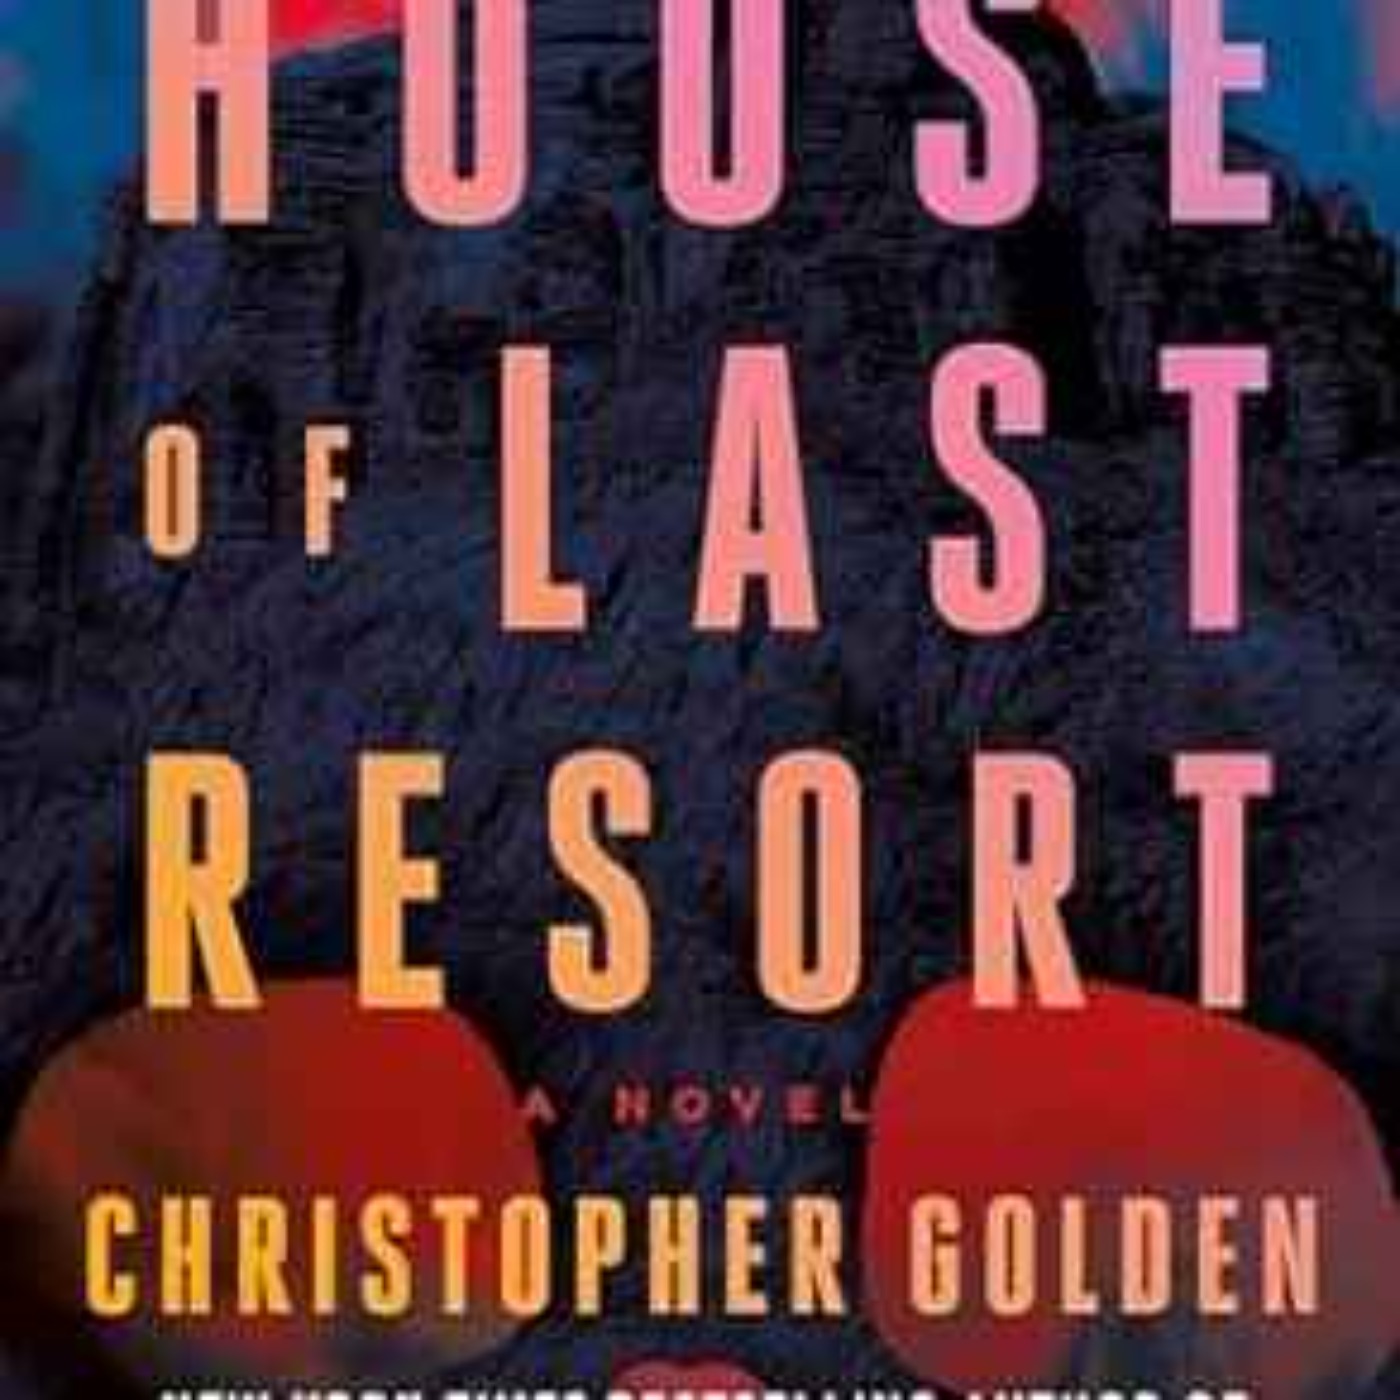 Christopher Golden - The House of Last Resort